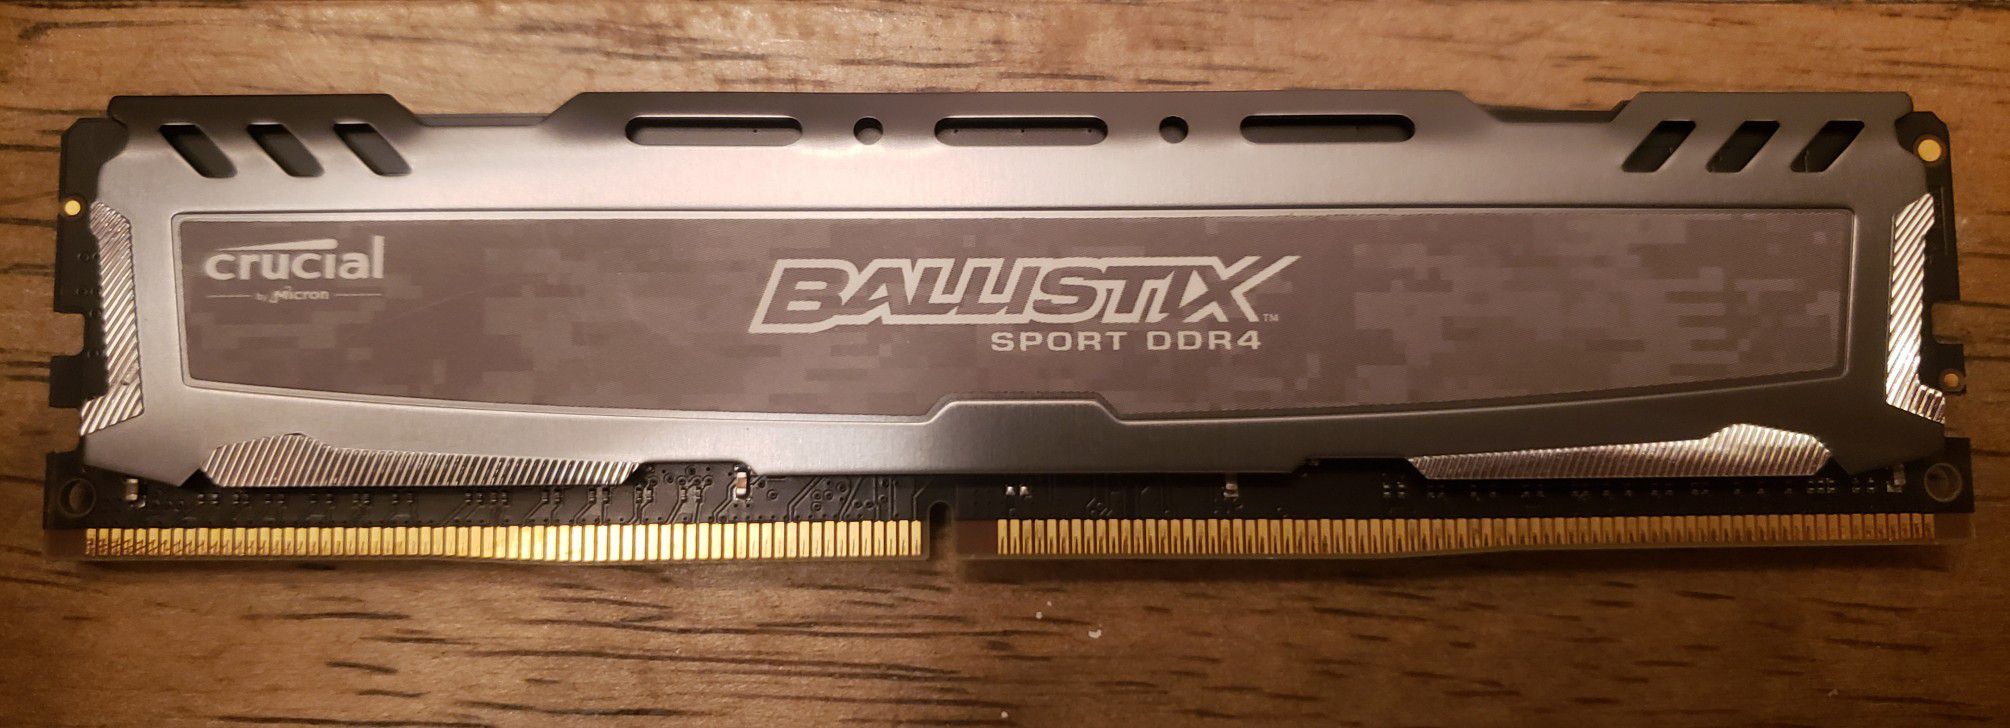 Ballistix DDR4 2400 MHz 8gb